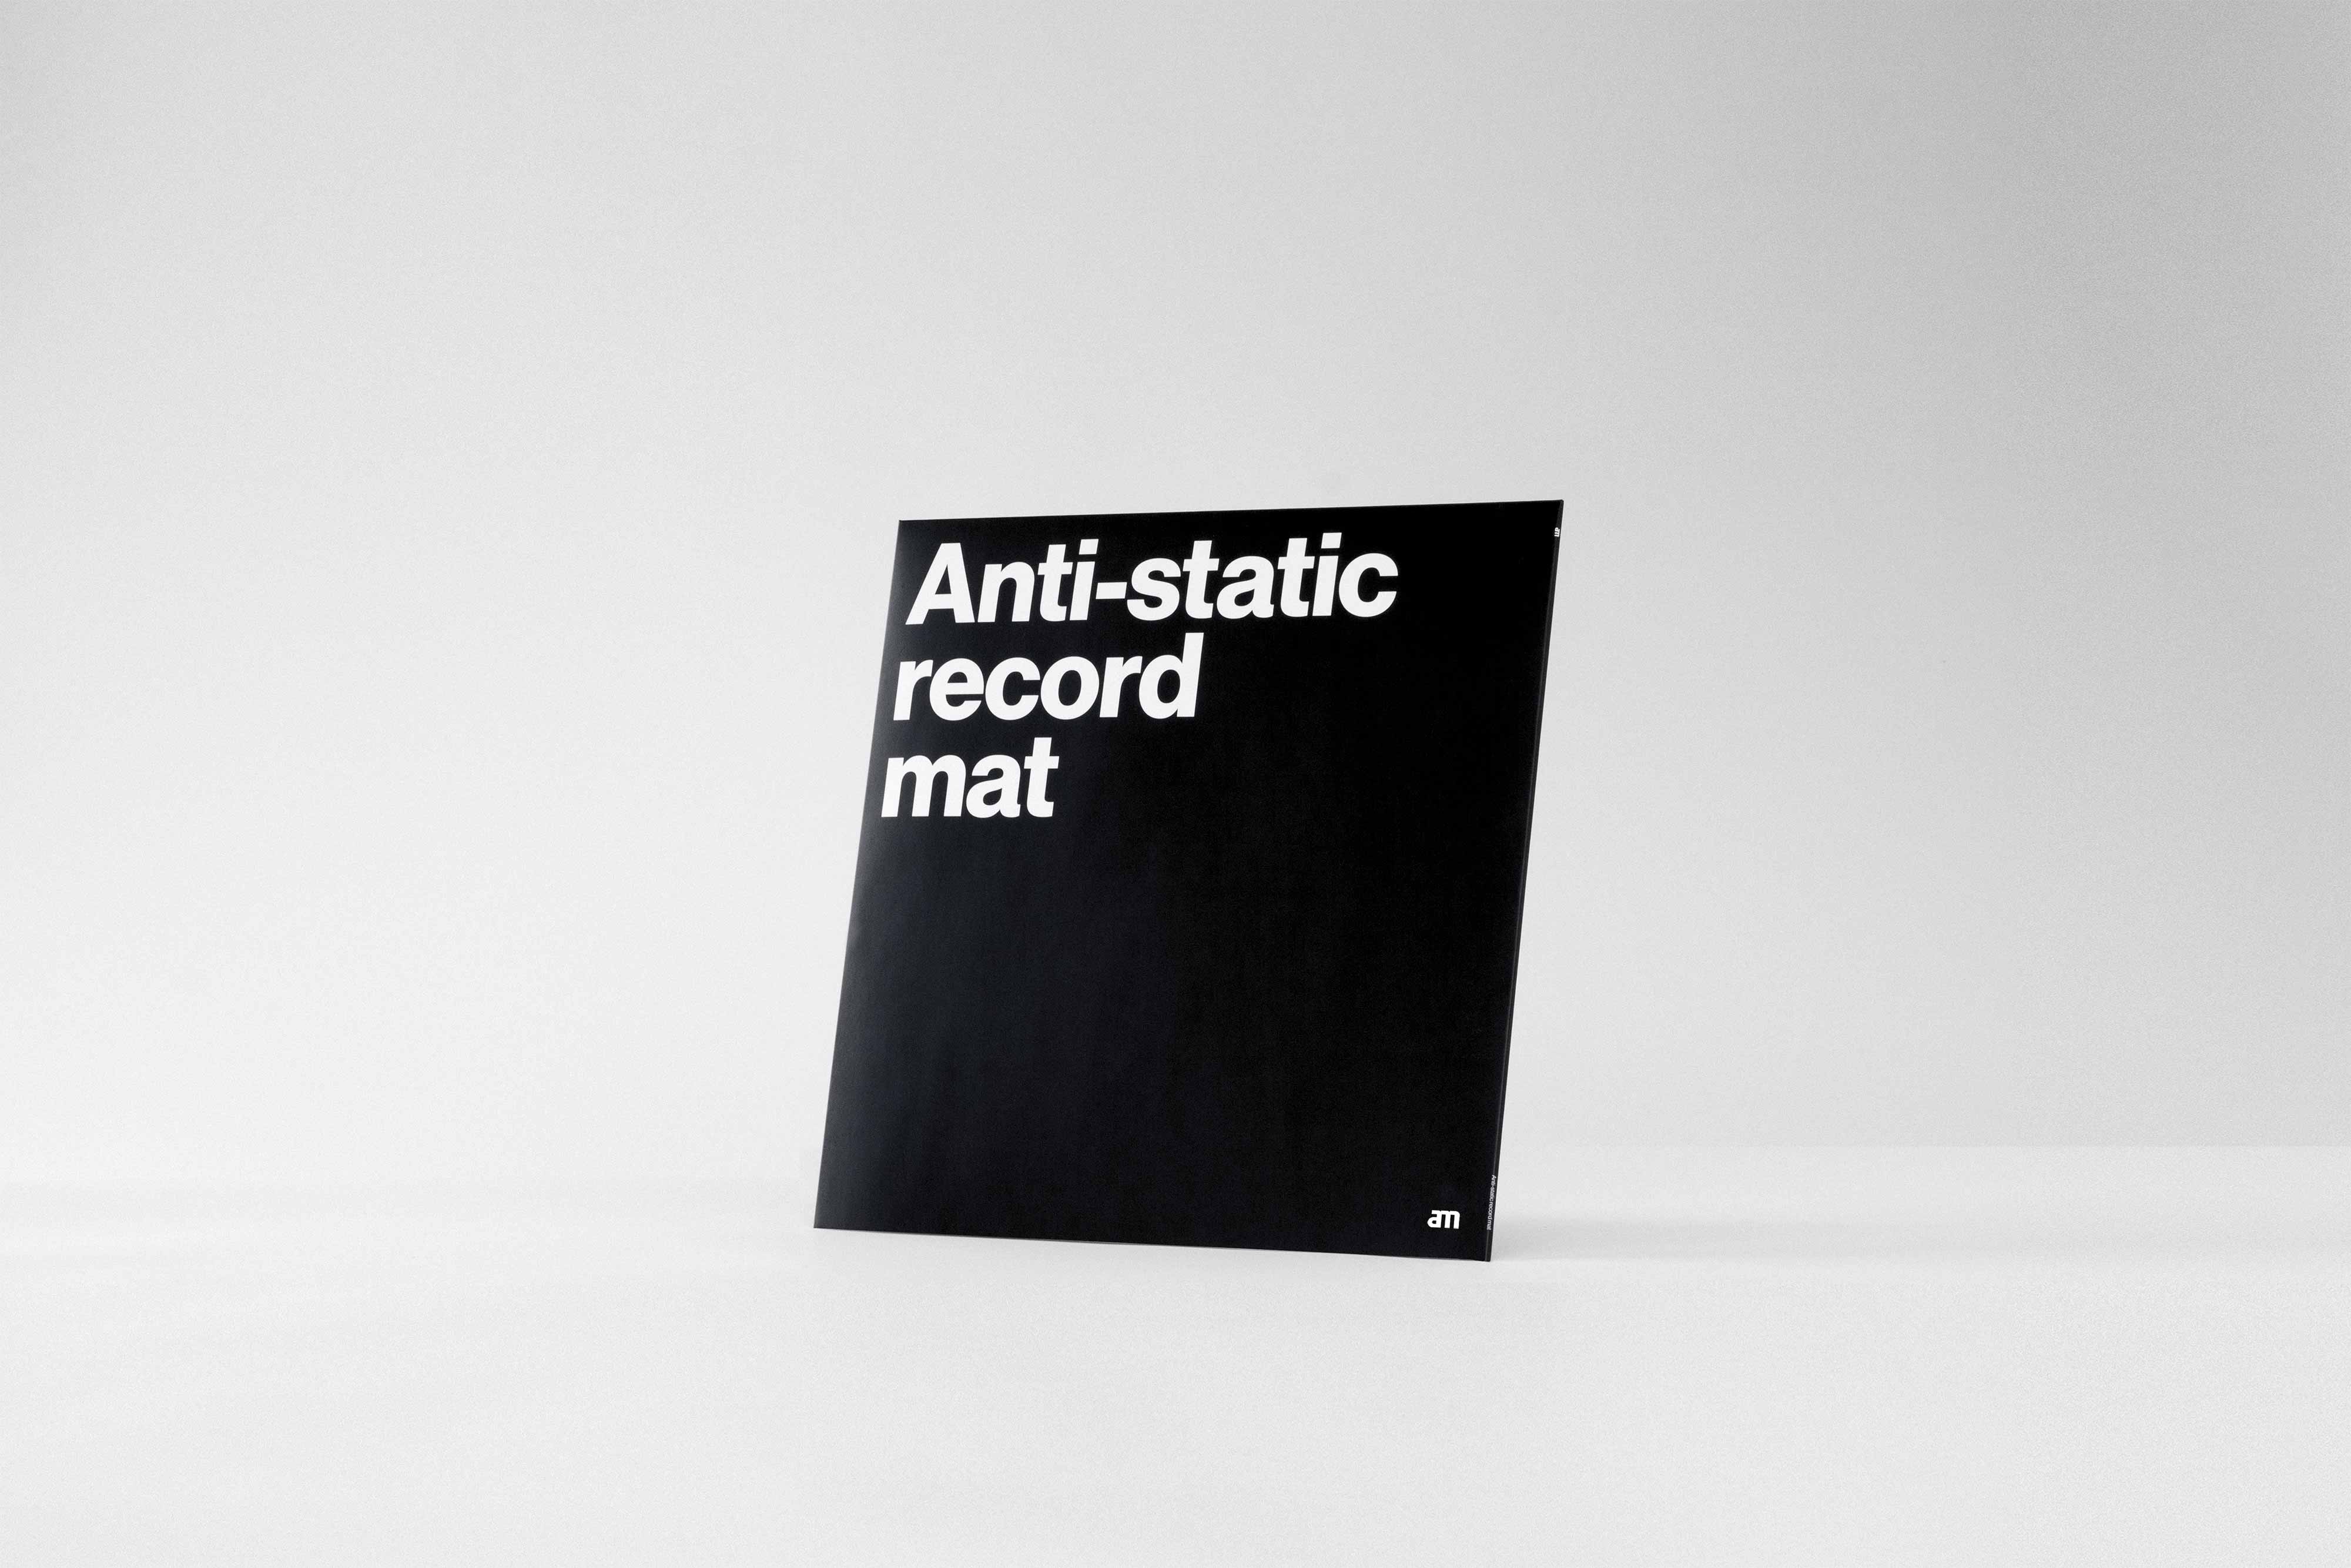 AM Anti-static record mat